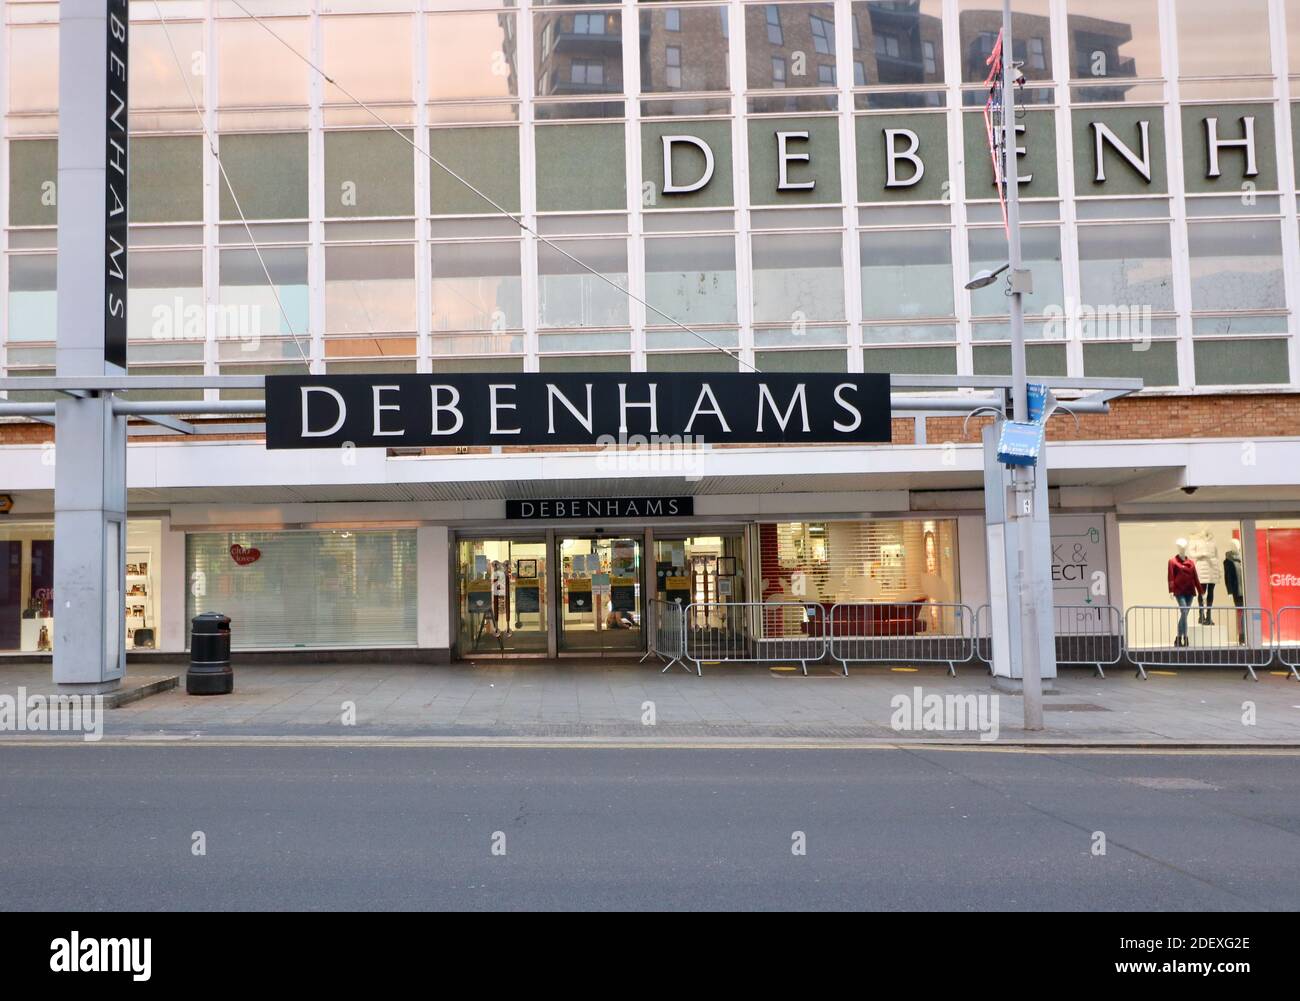 2 December 2020 - Harrow, UK: Facade of Debenhams on Wild Wednesday Stock Photo